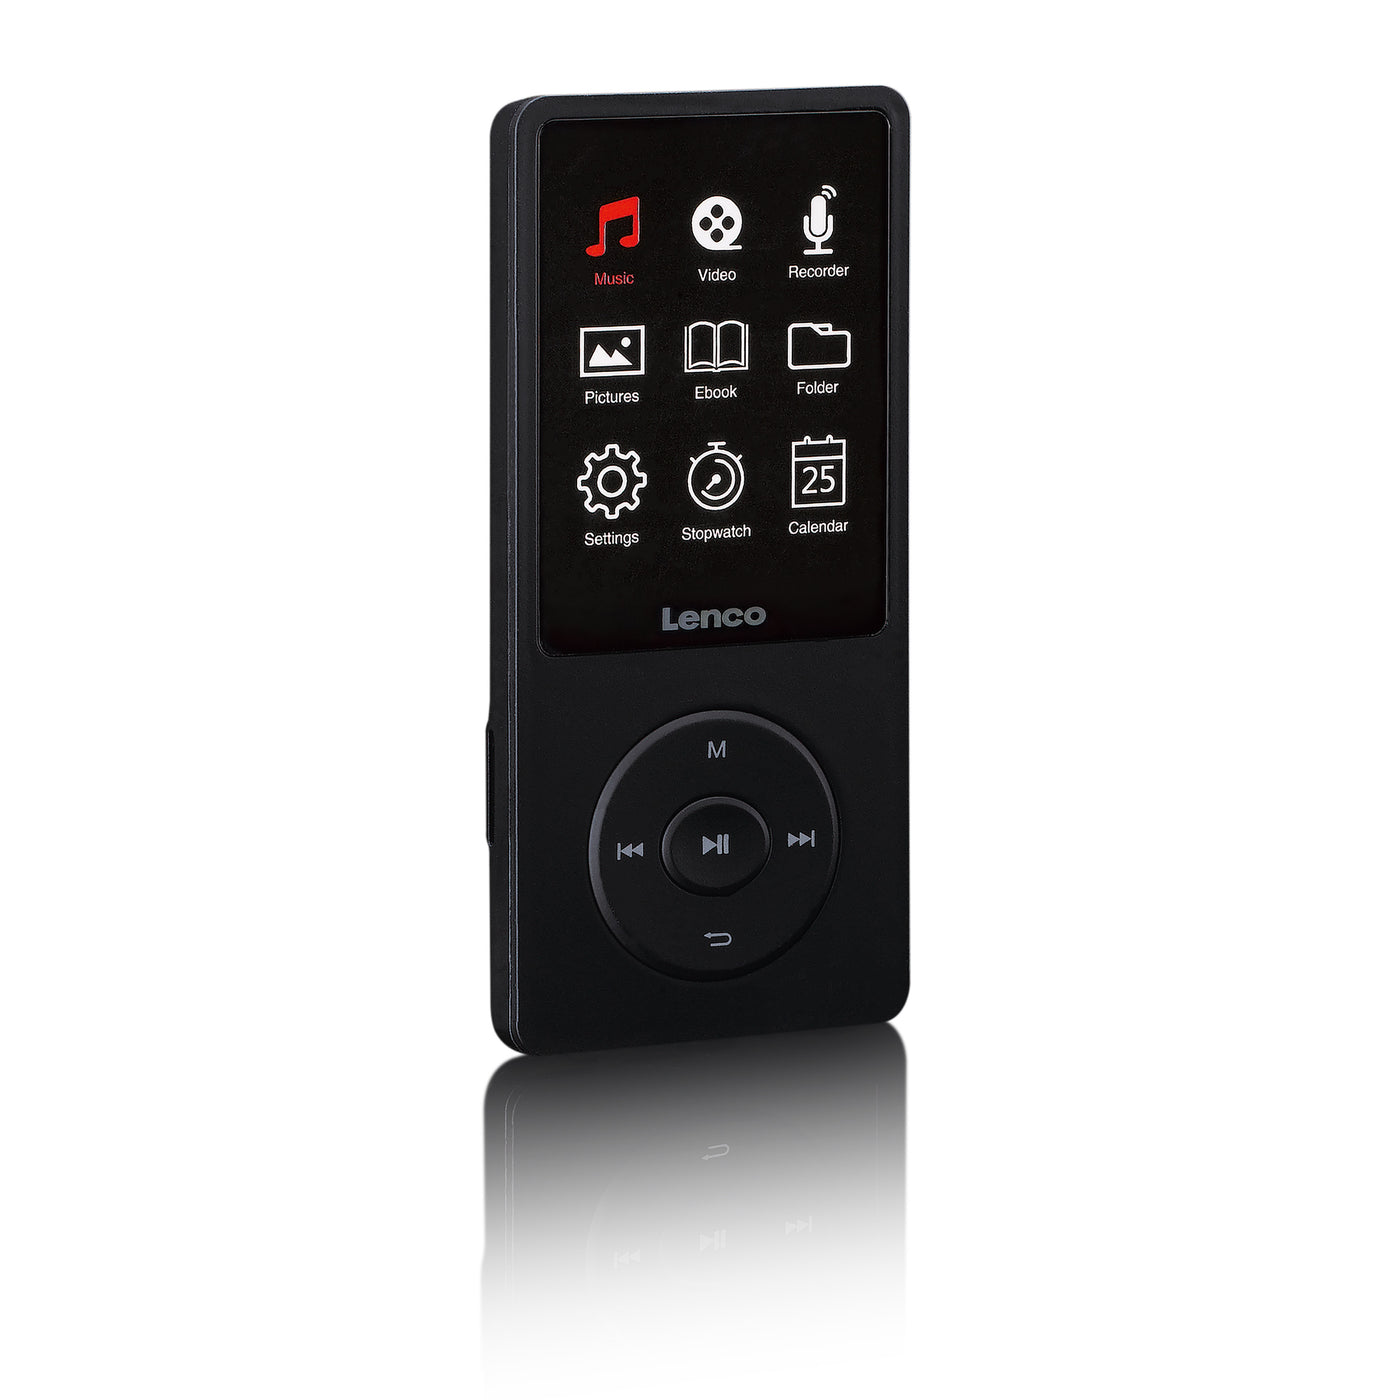 LENCO Xemio-669BK - MP3/MP4 player with 2.4'' TFT LCD display and 8GB internal memory - Black